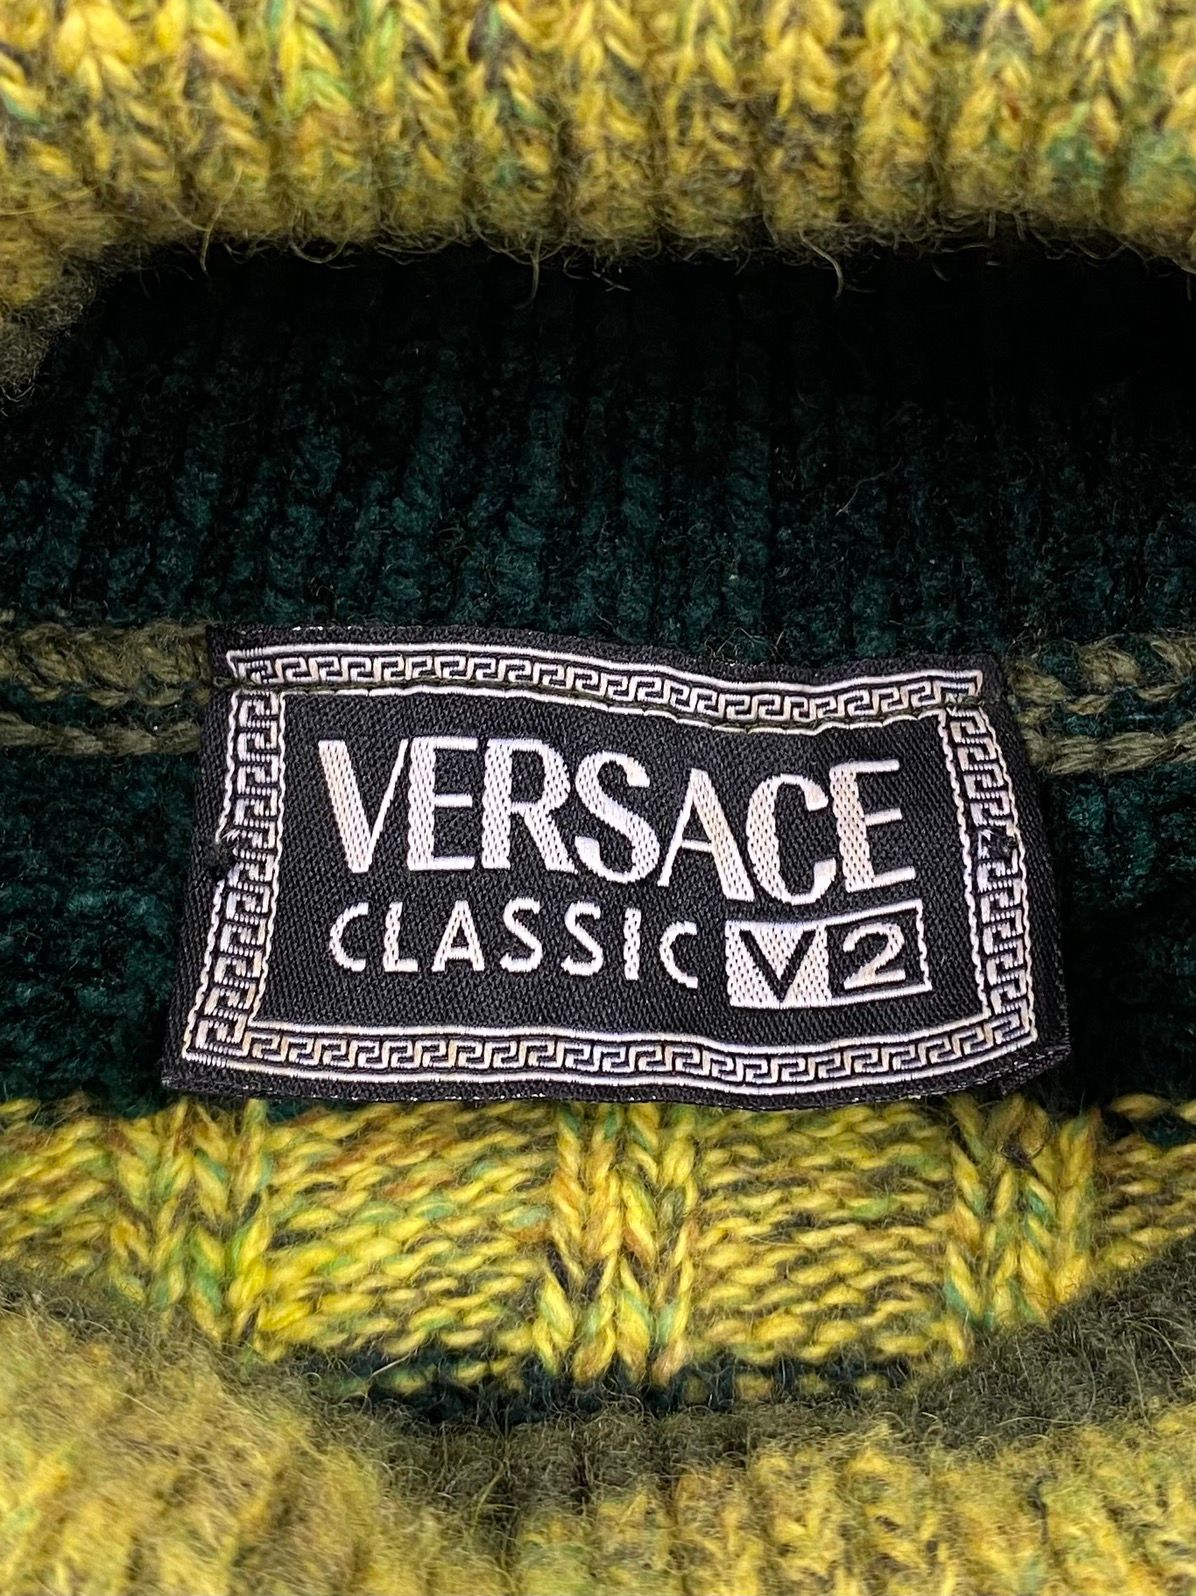 Vintage 1990s Vintage Versace Classic V2 Stripped Turtleneck Sweater Size US L / EU 52-54 / 3 - 5 Thumbnail